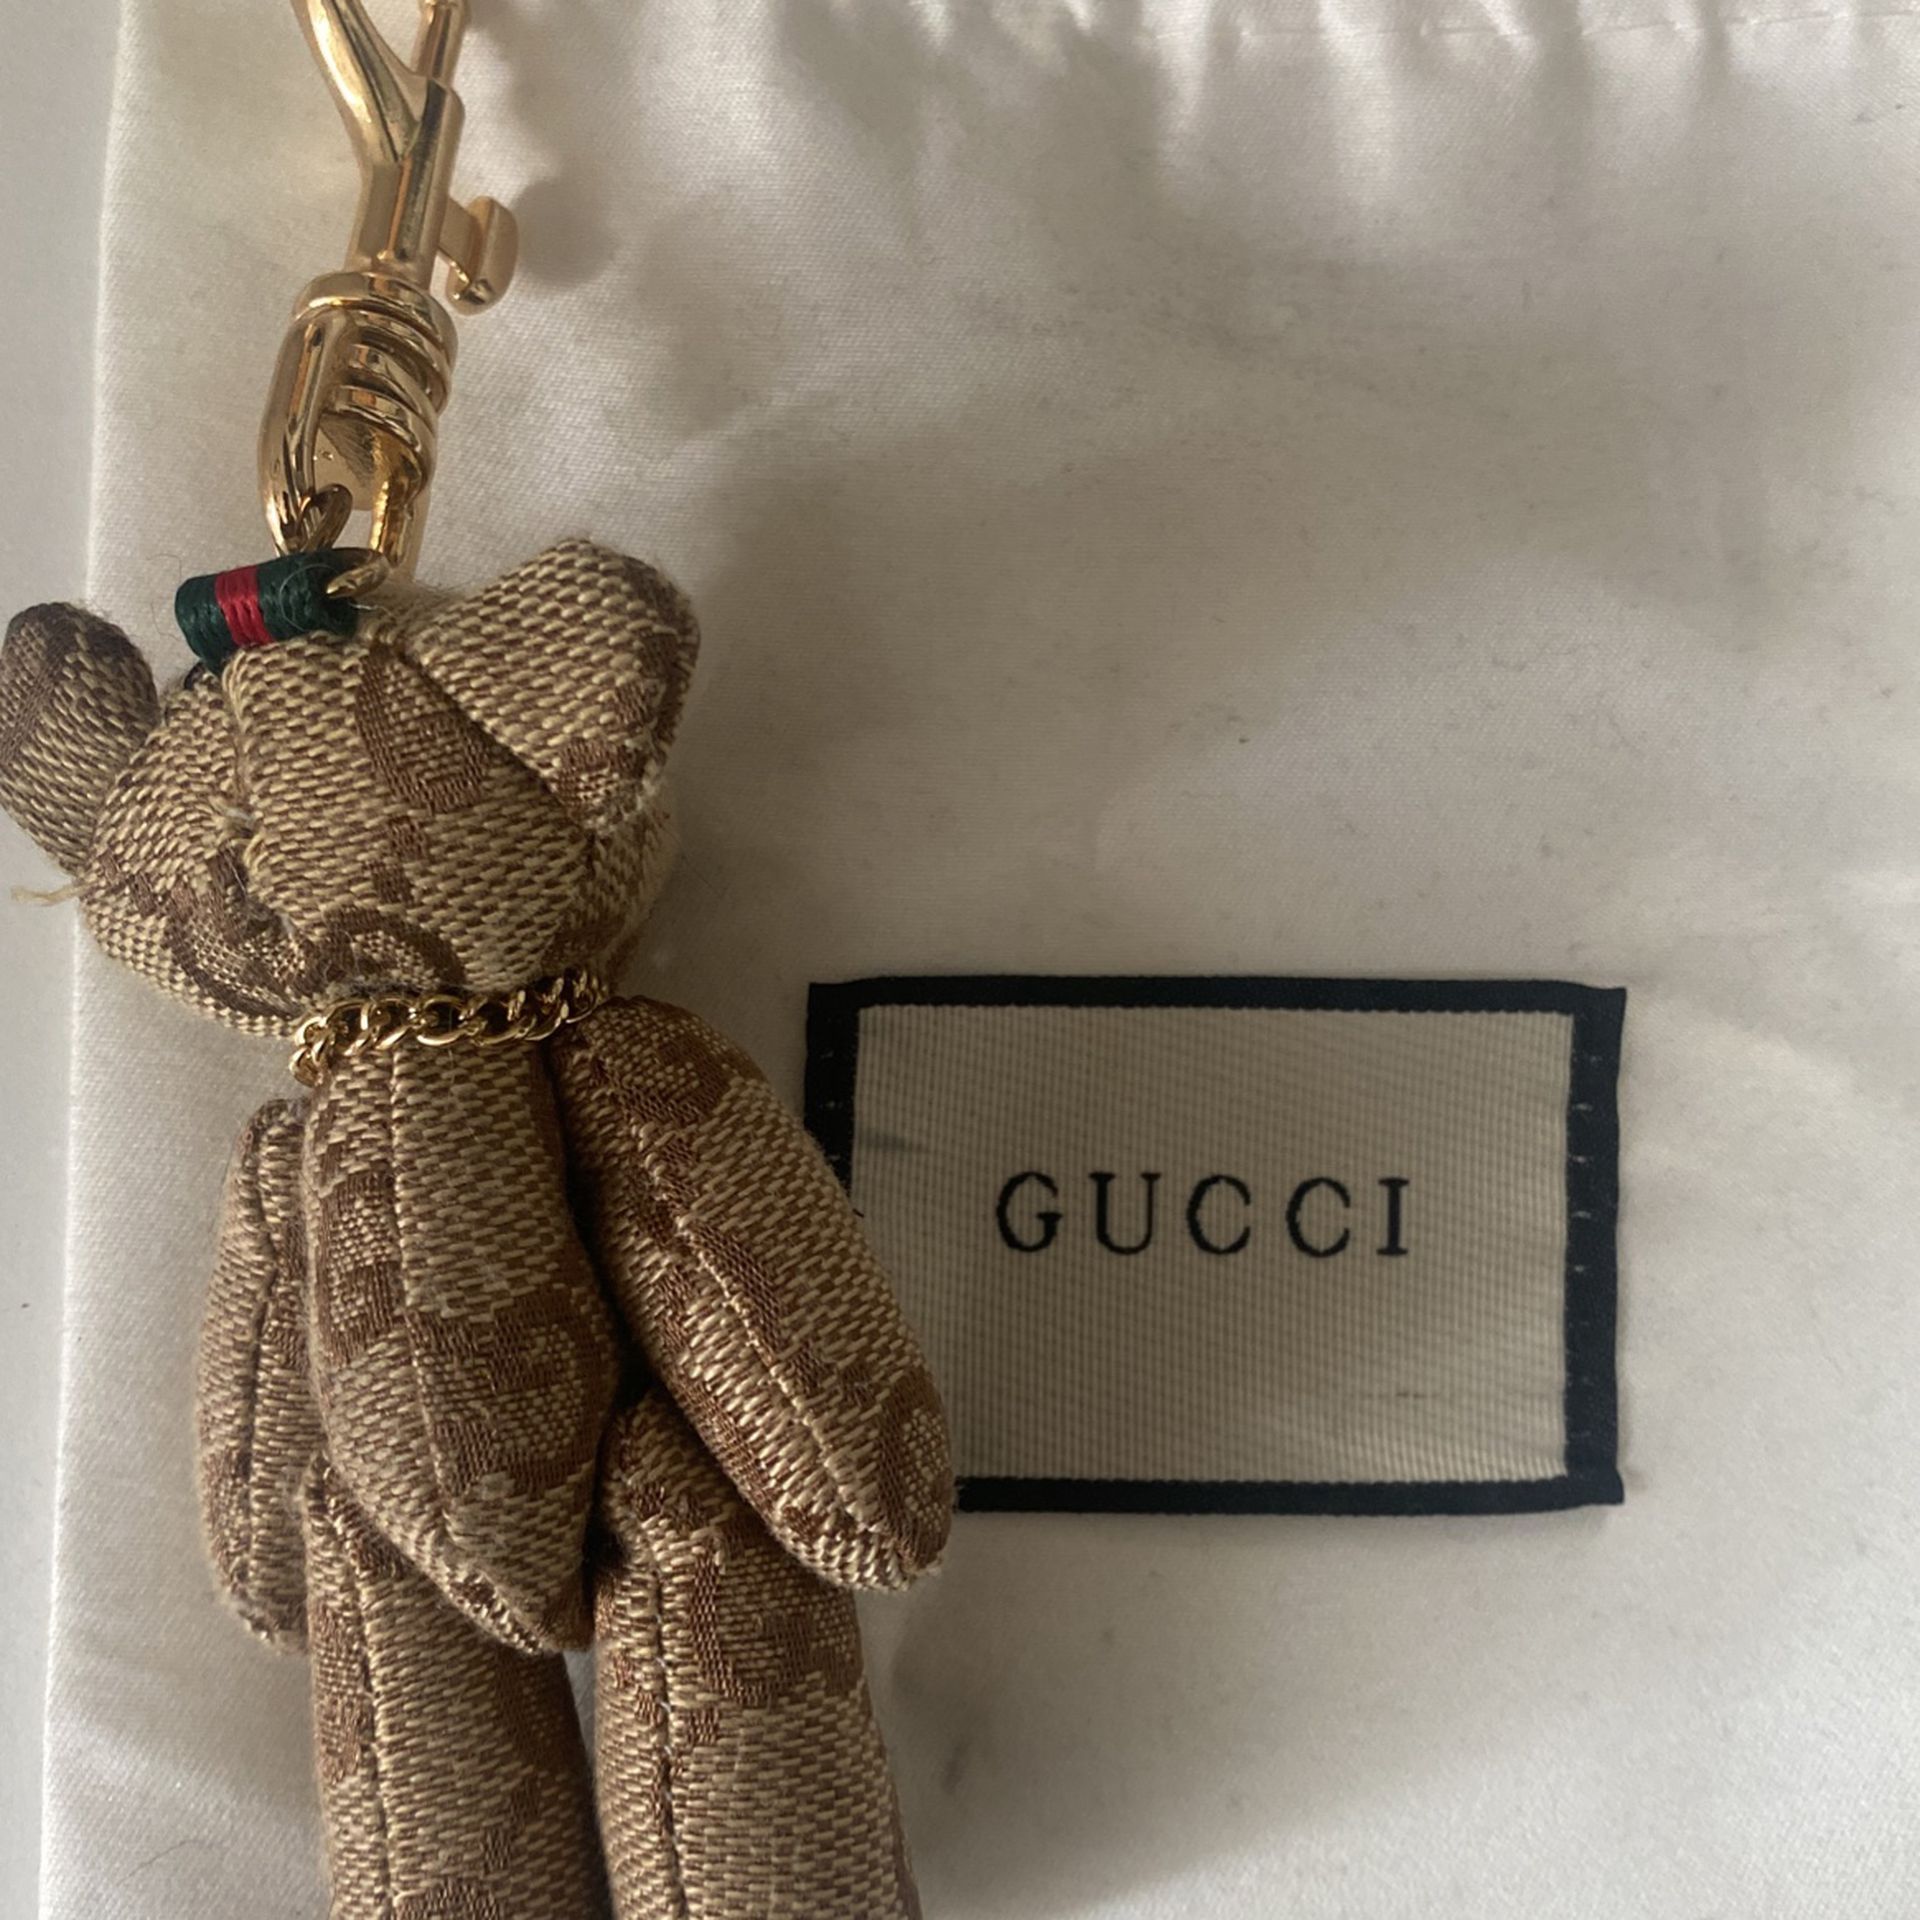 GUCCI Teddy Bear Keychain with Box for Sale in El Cerrito, CA - OfferUp